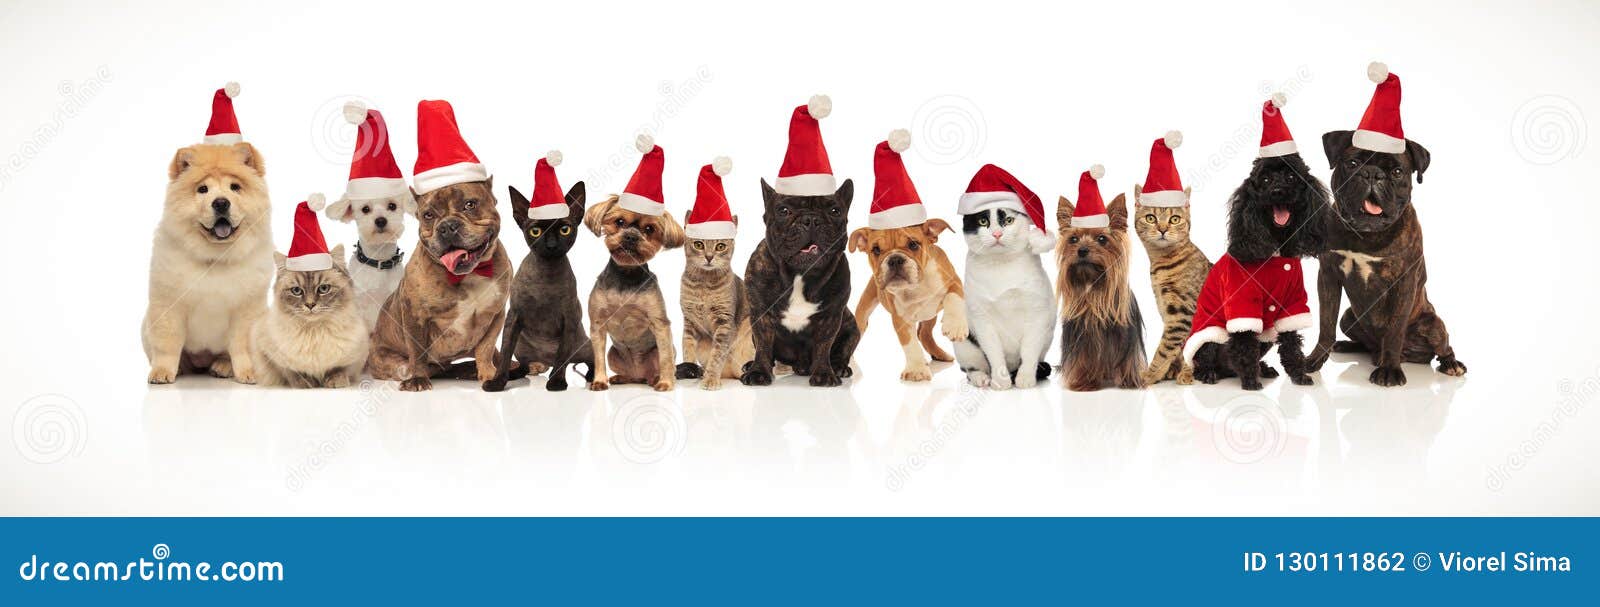 Santa Claus Dog Fancy Dress Father Christmas Pet Animal Festive Fun Xmas Costume 